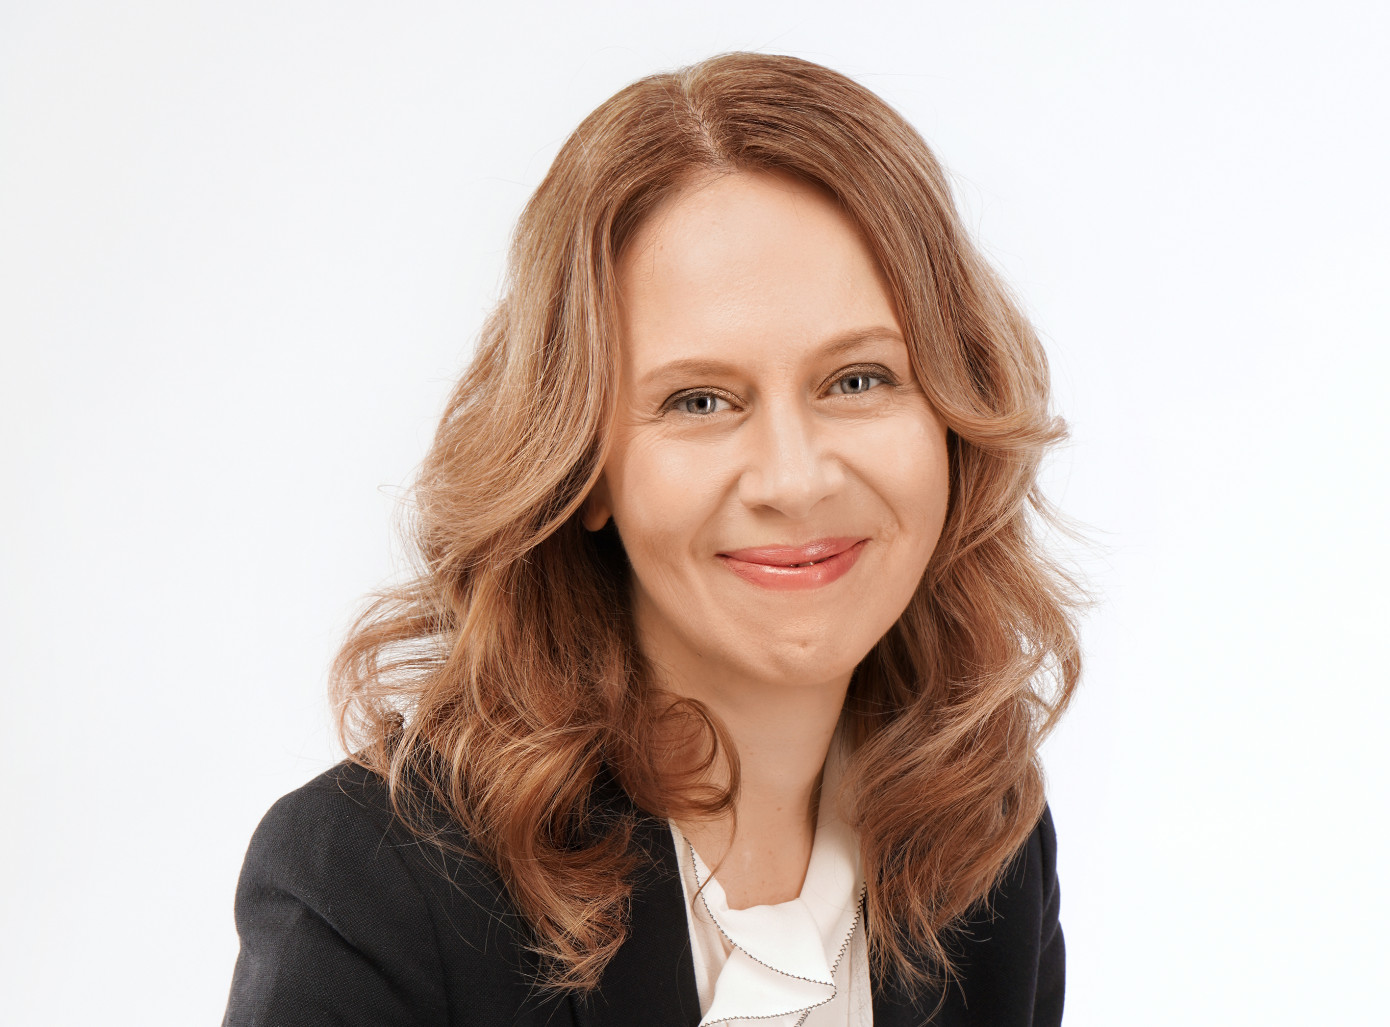 Ilim Group CEO, Ksenia Sosnina named European CEO of the year